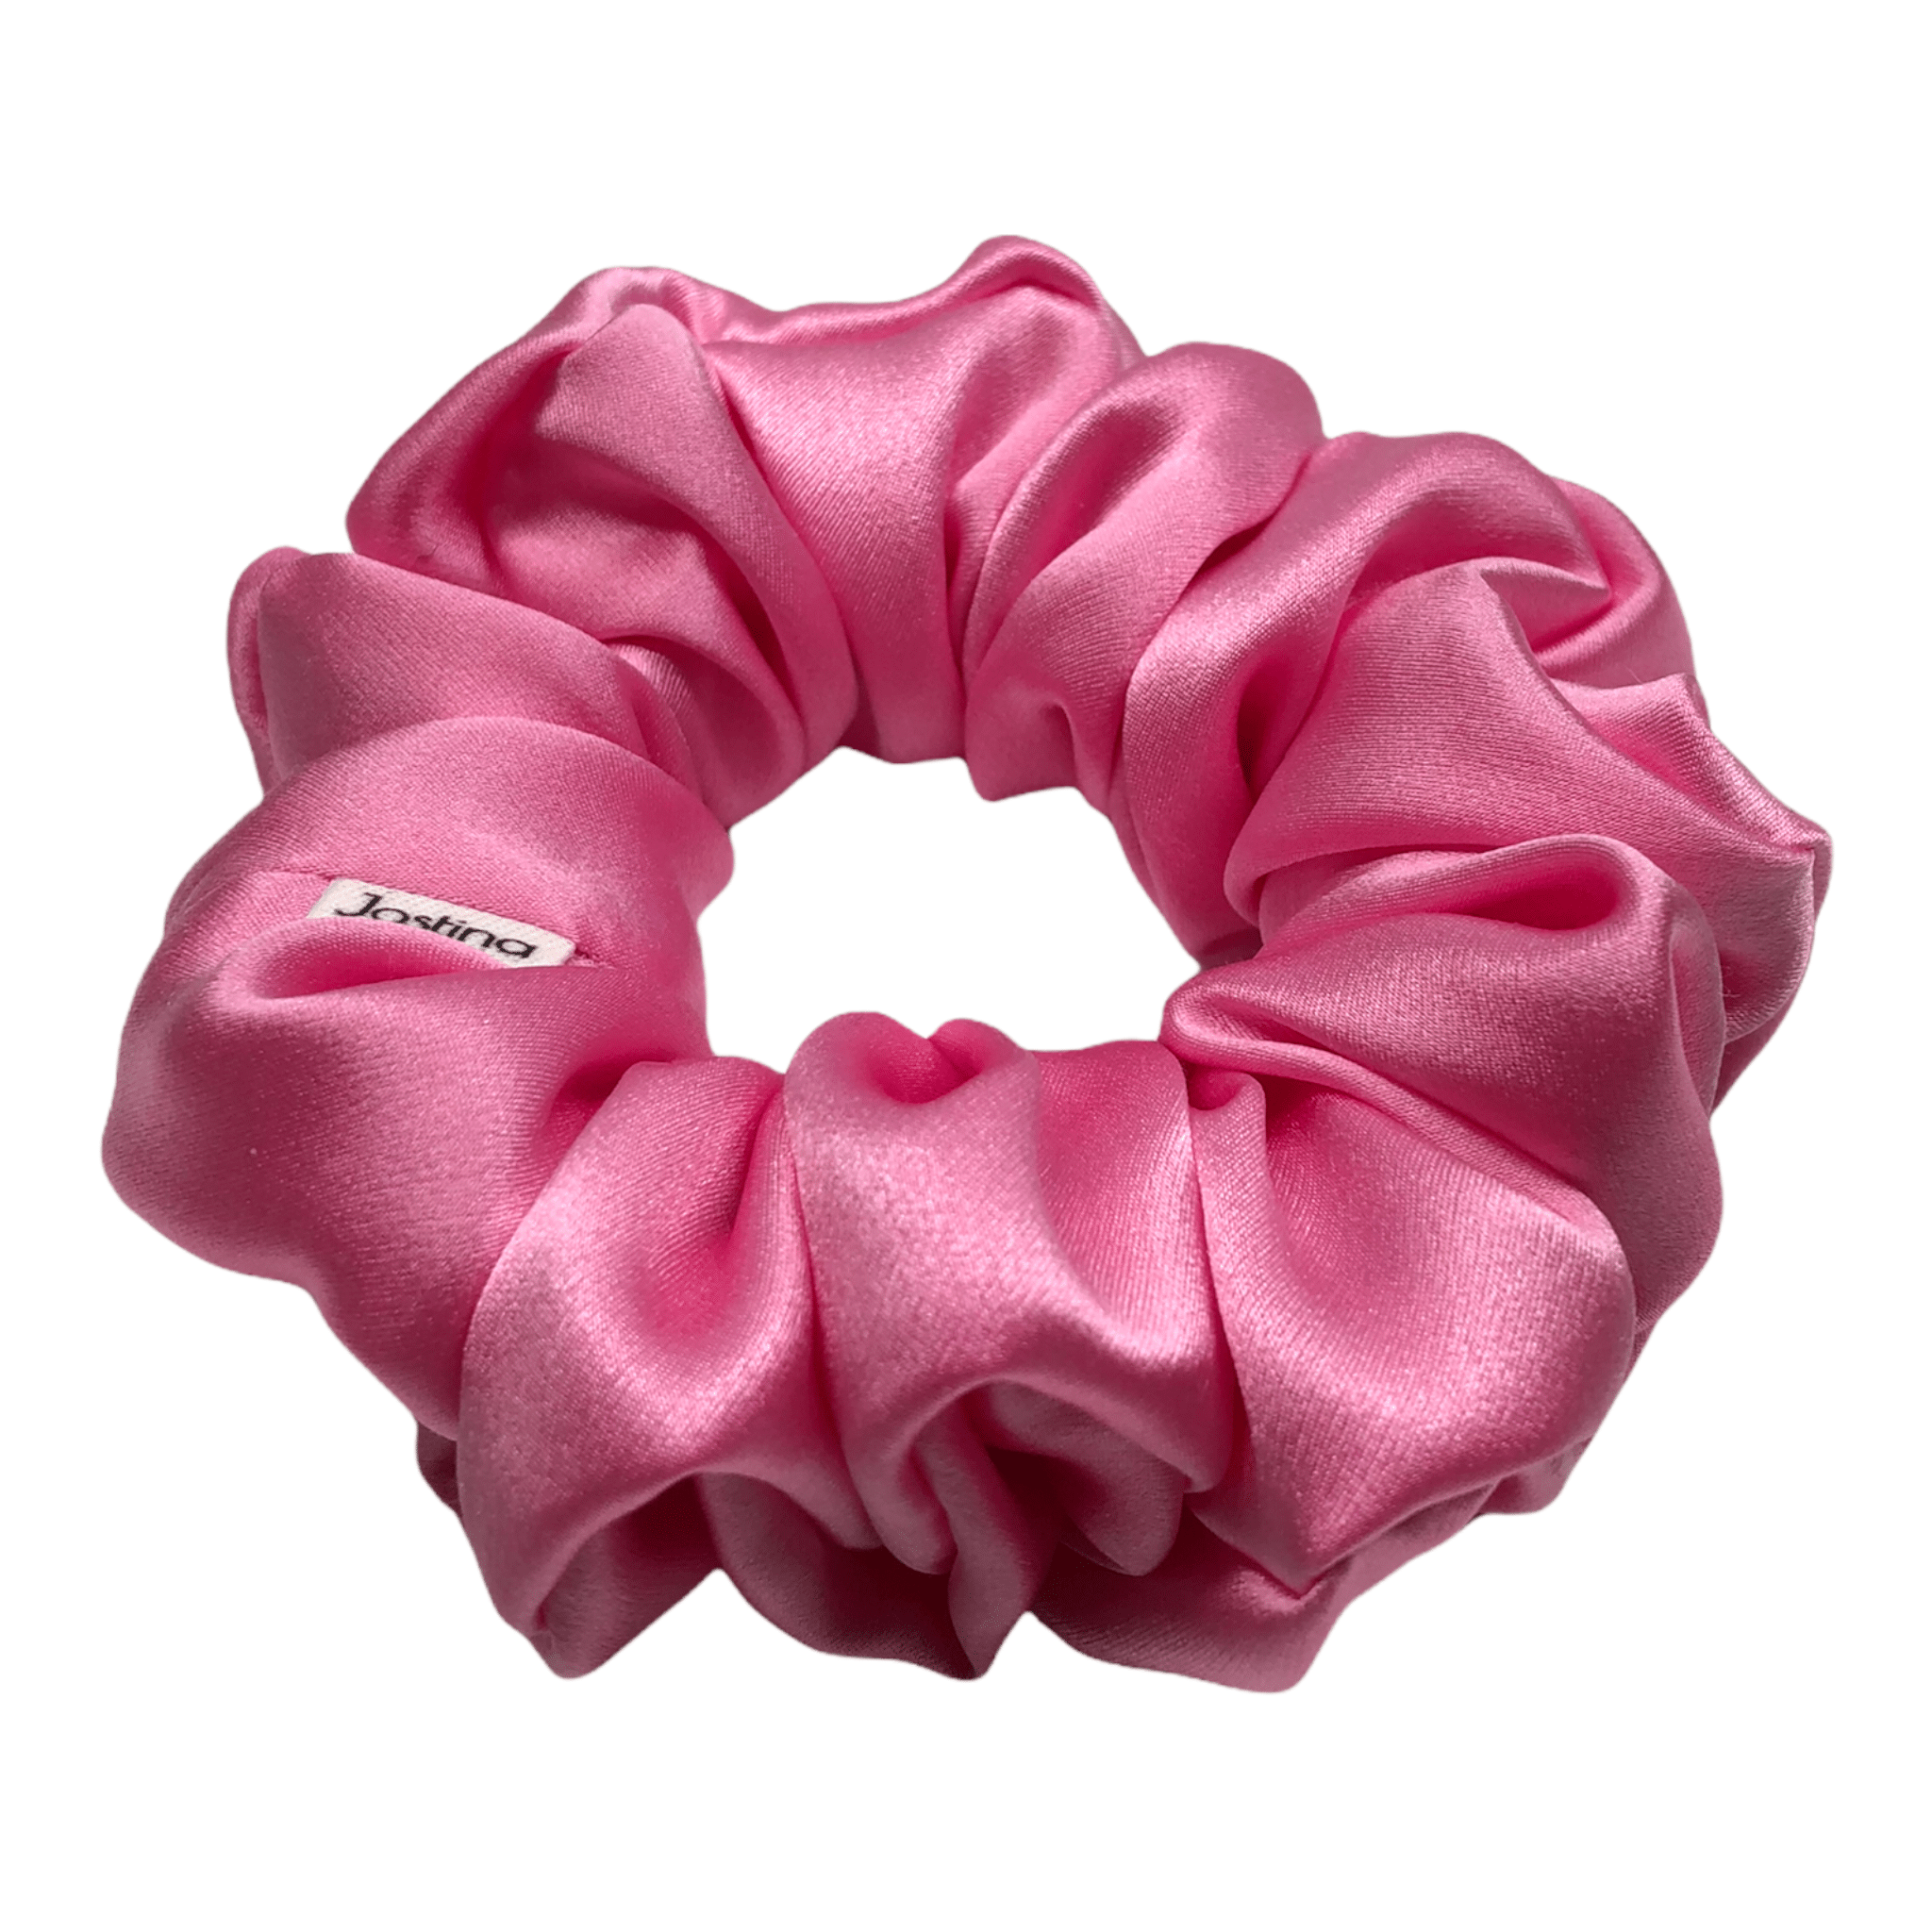 Silk: Bubble Gum Pink - Jostina